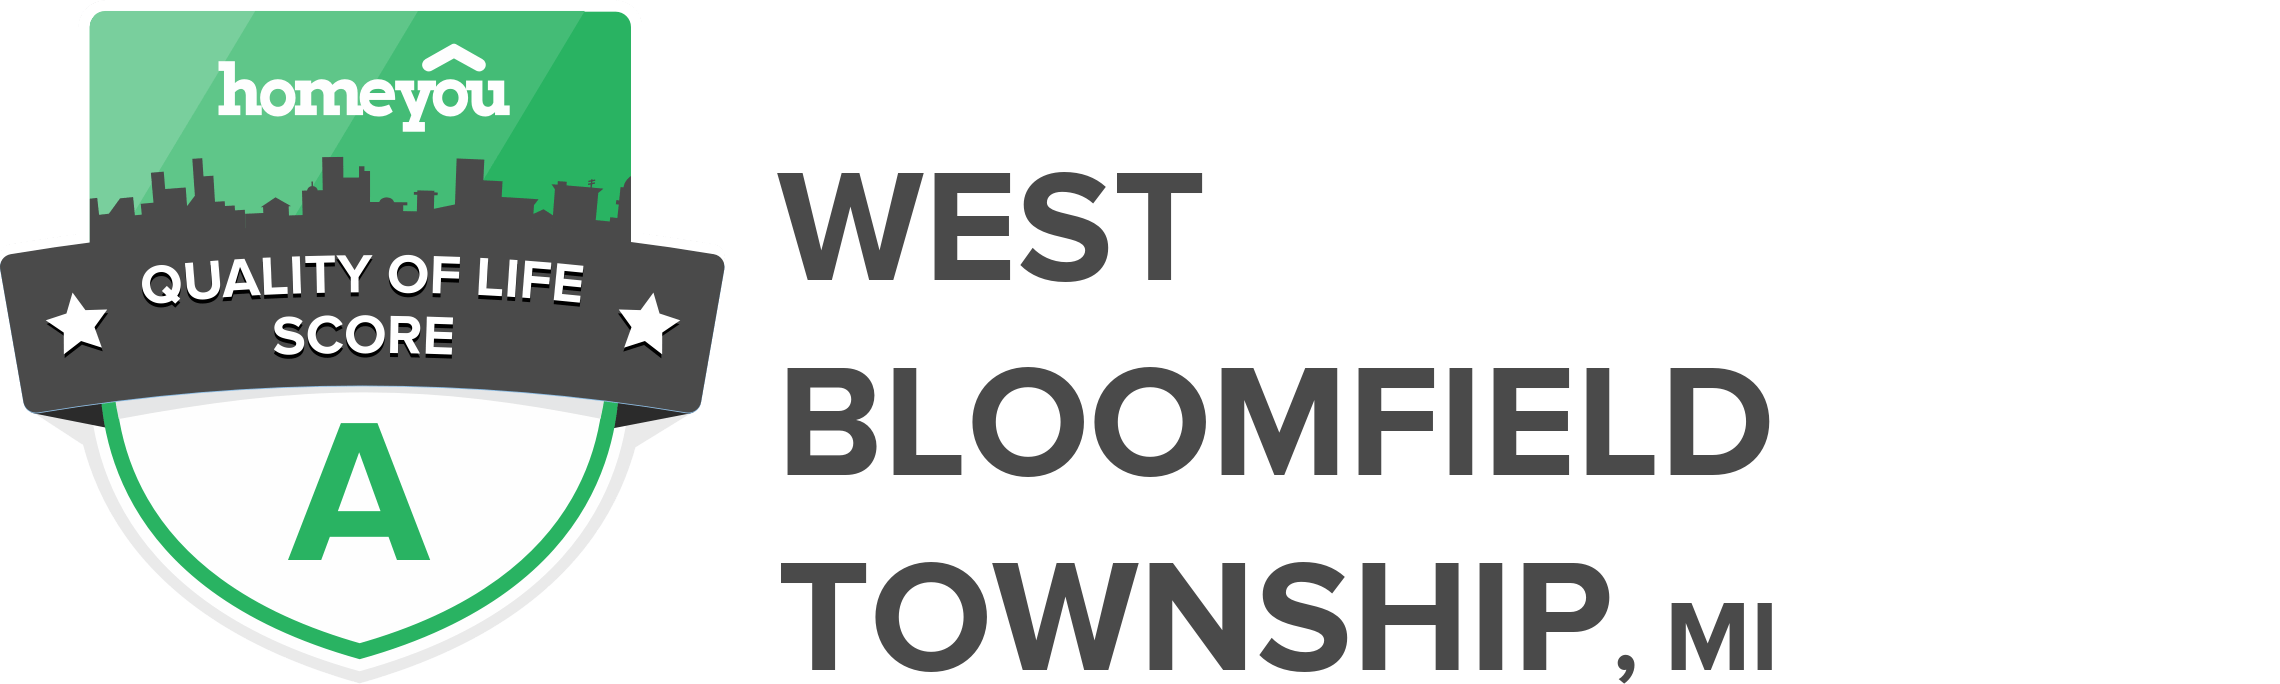 West Bloomfield Township, MI